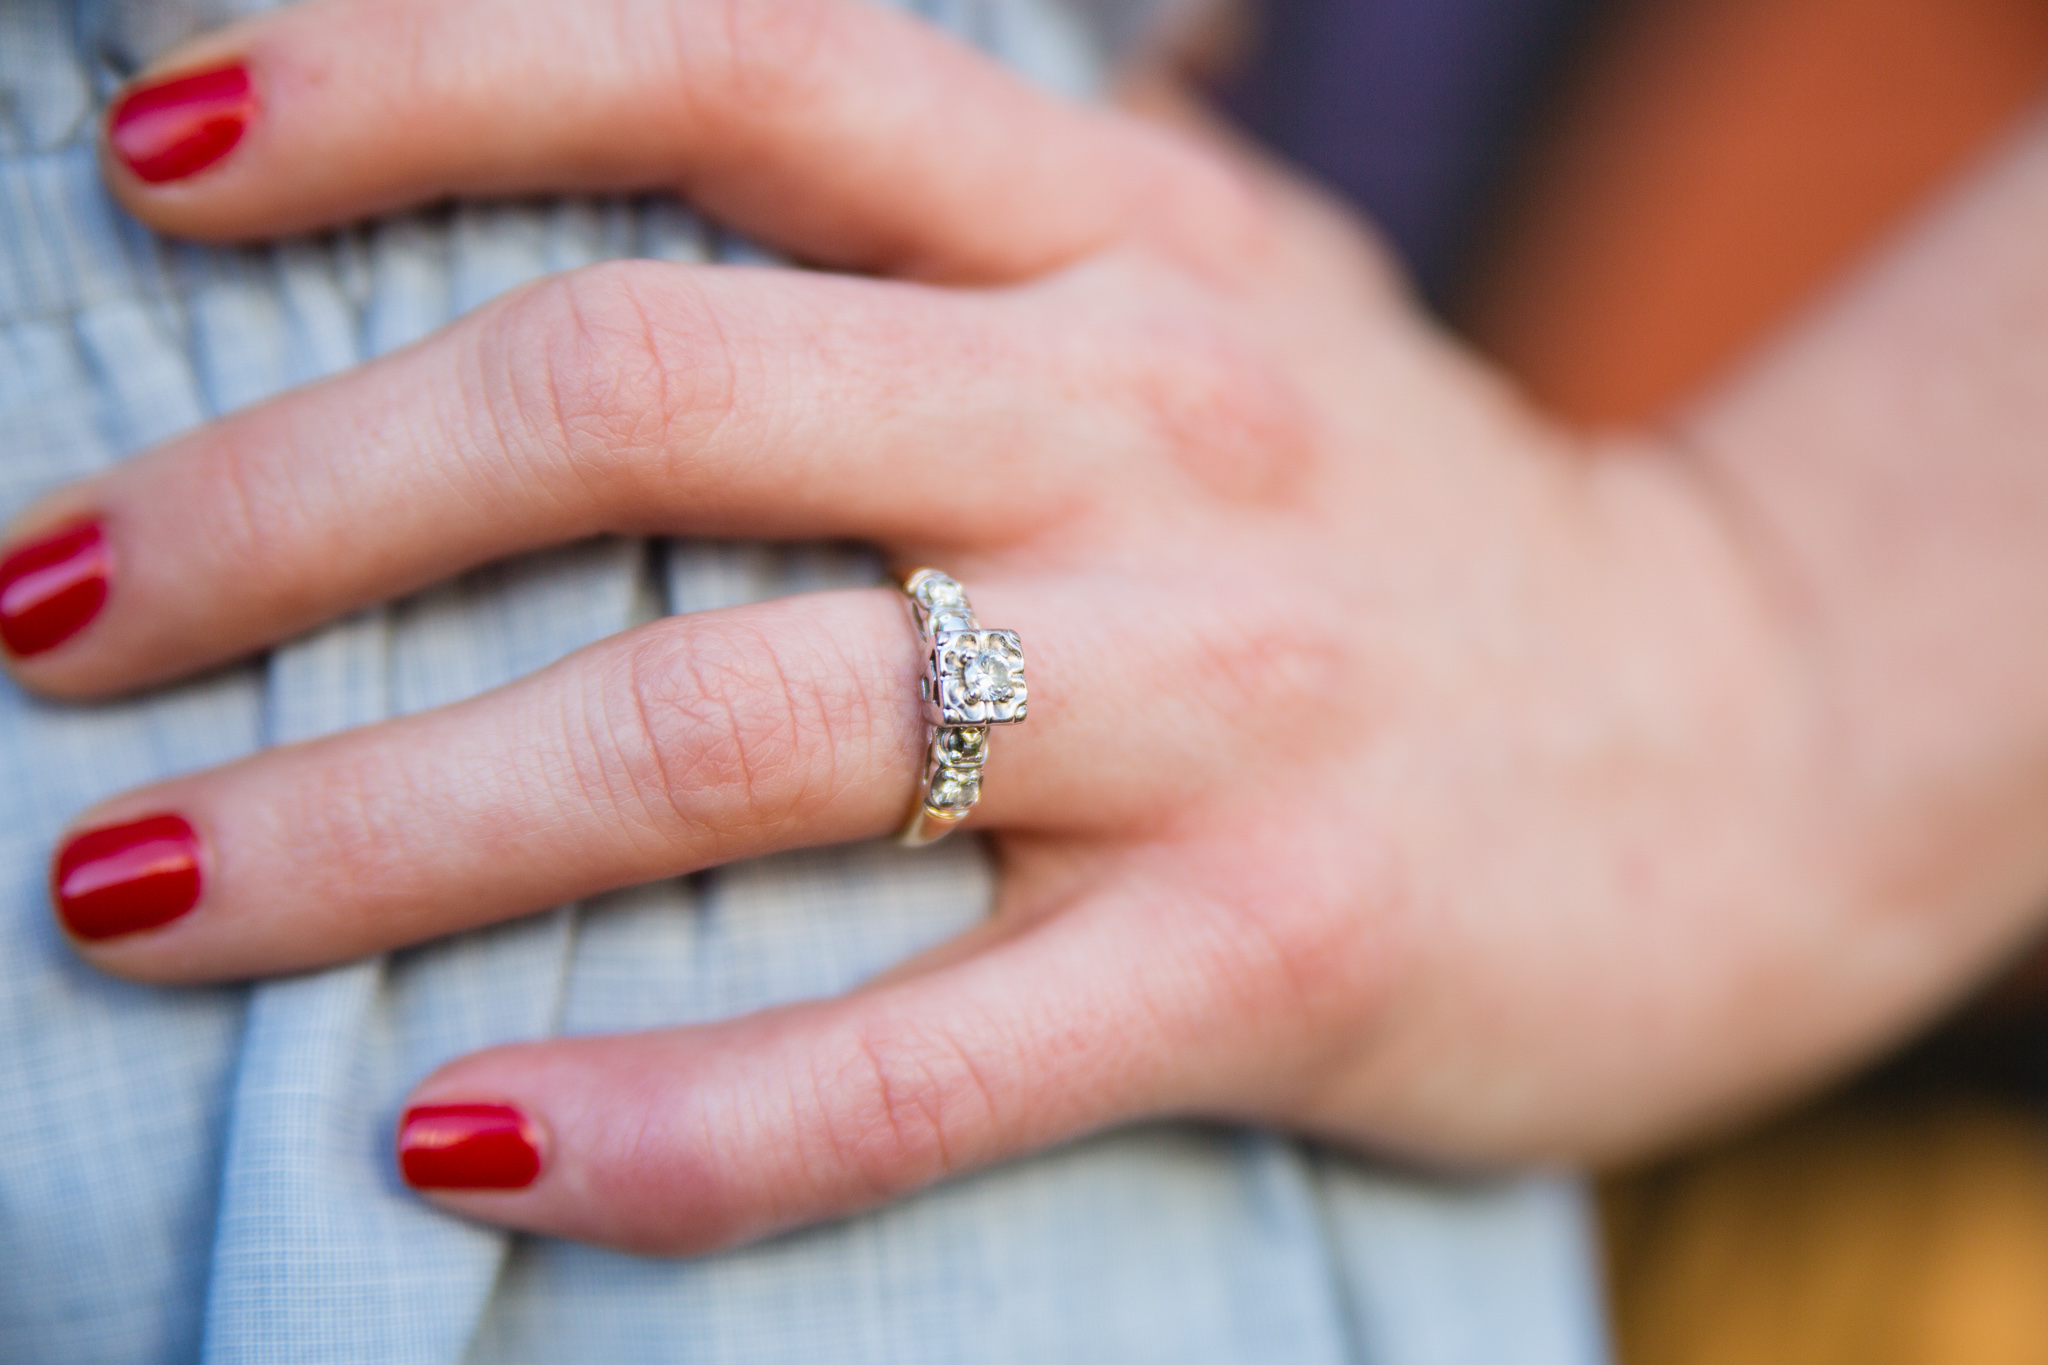 Close up image of unique vintage engagement ring by Phoenix engagement photographer PMA Photography.